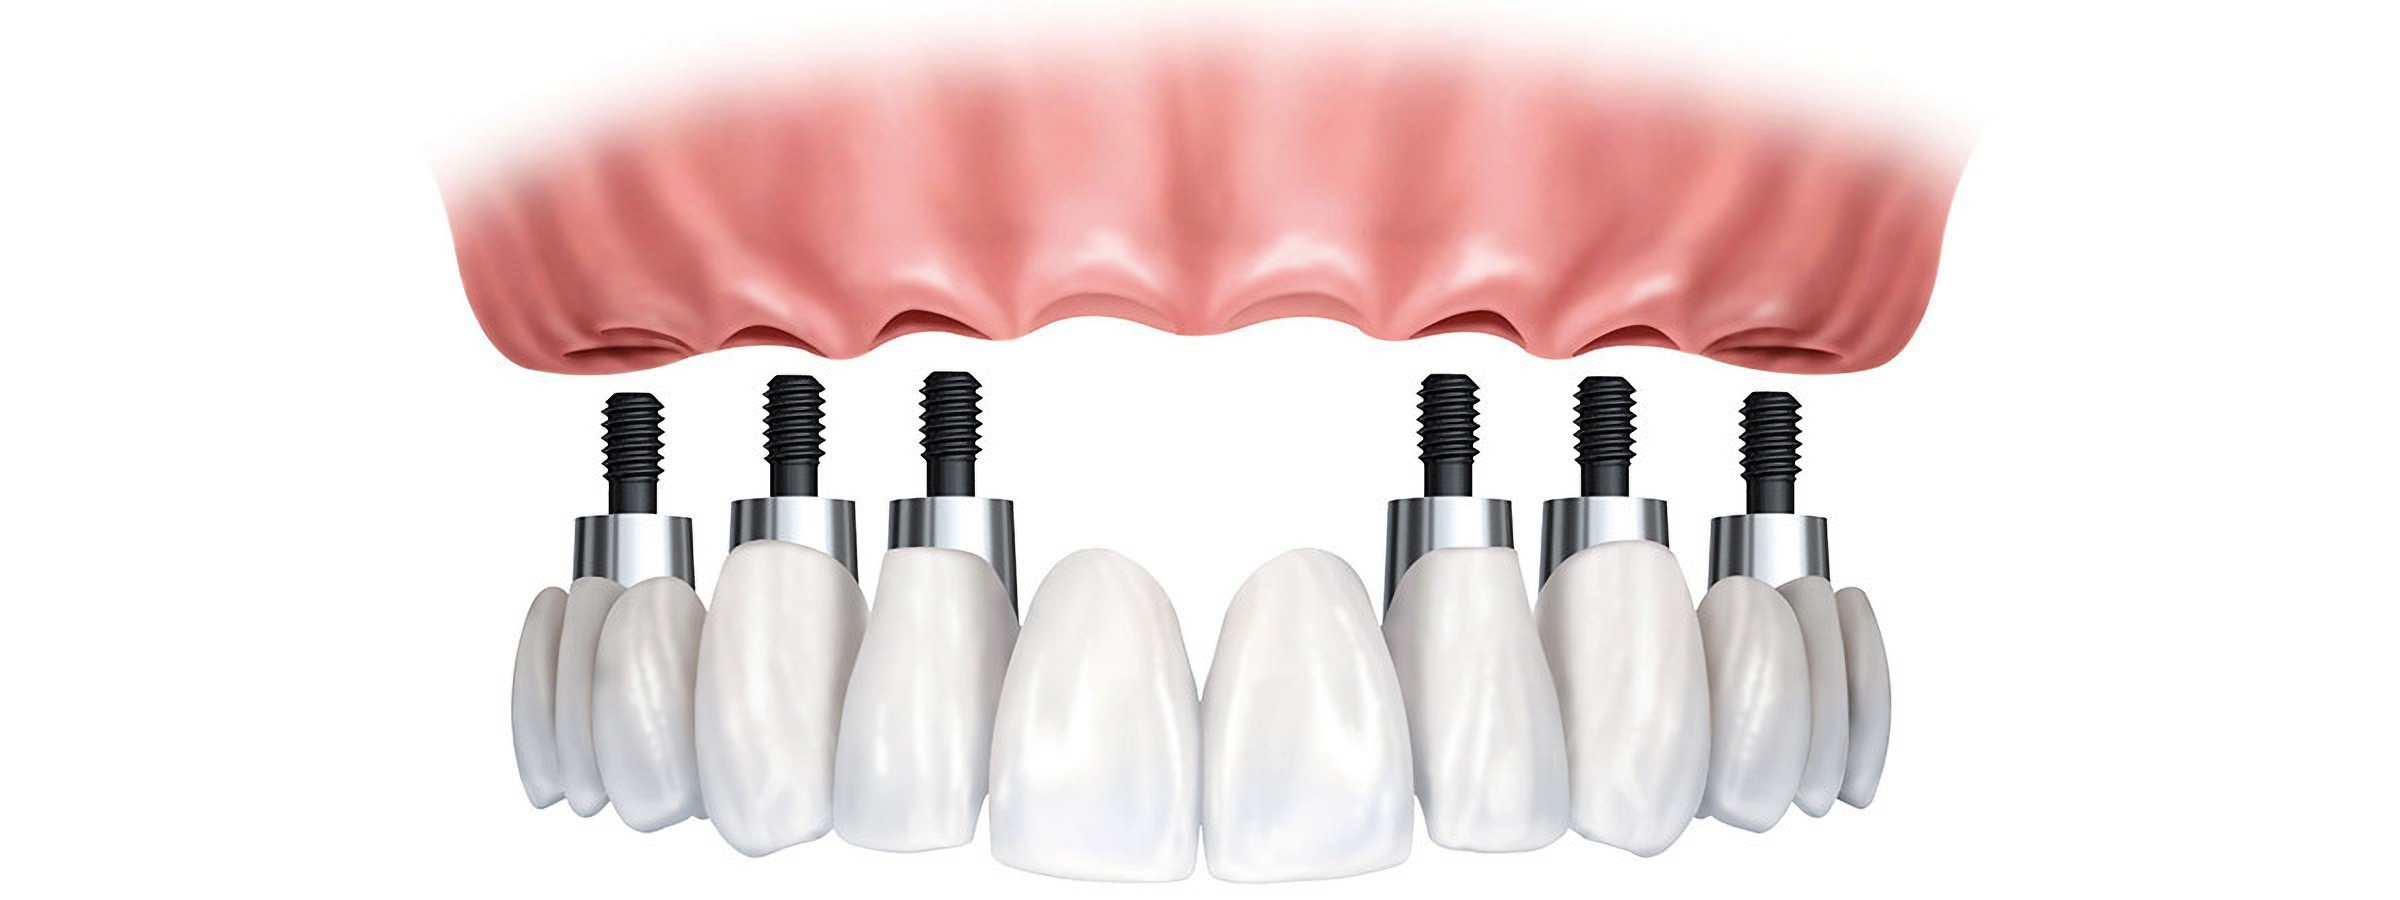 Getting dental implants in Turkey